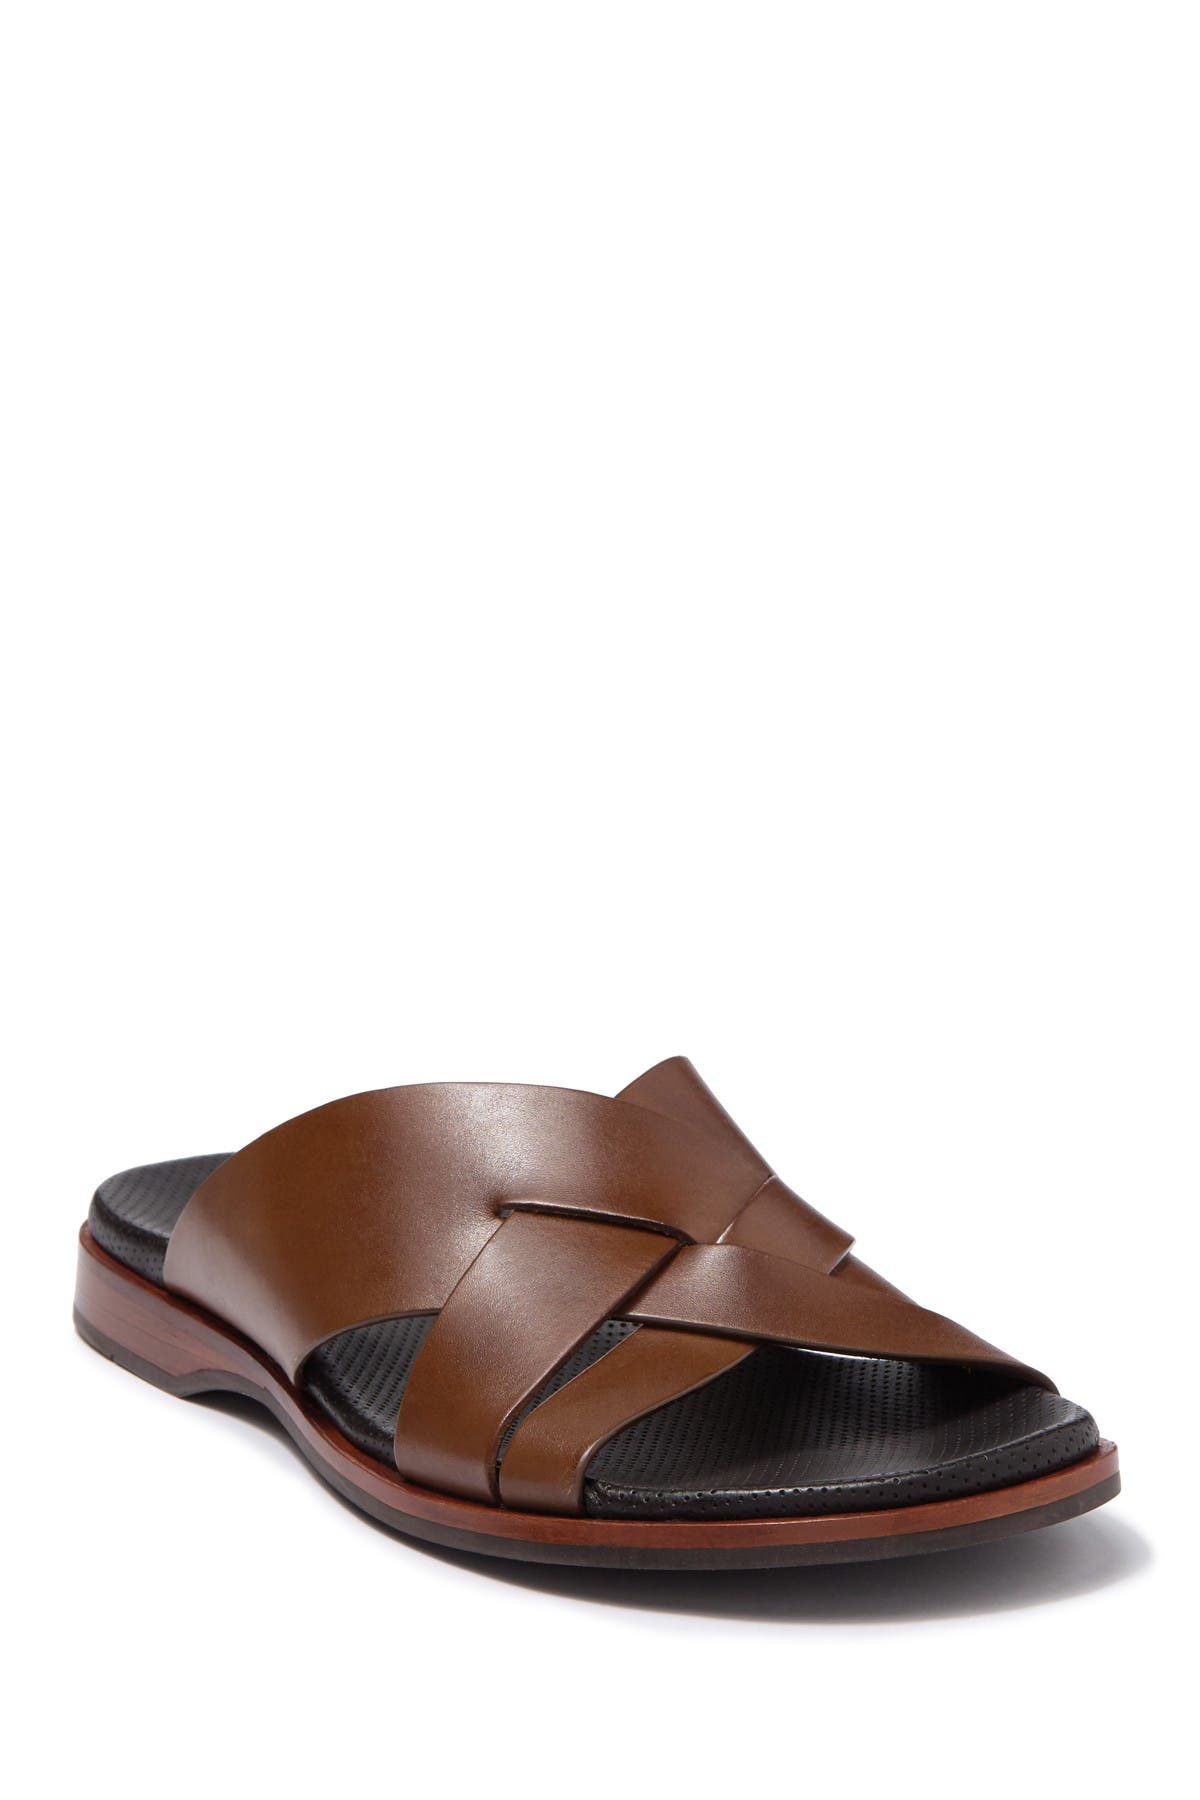 Cole Haan | Goldwyn 2.0 Leather Sandal 